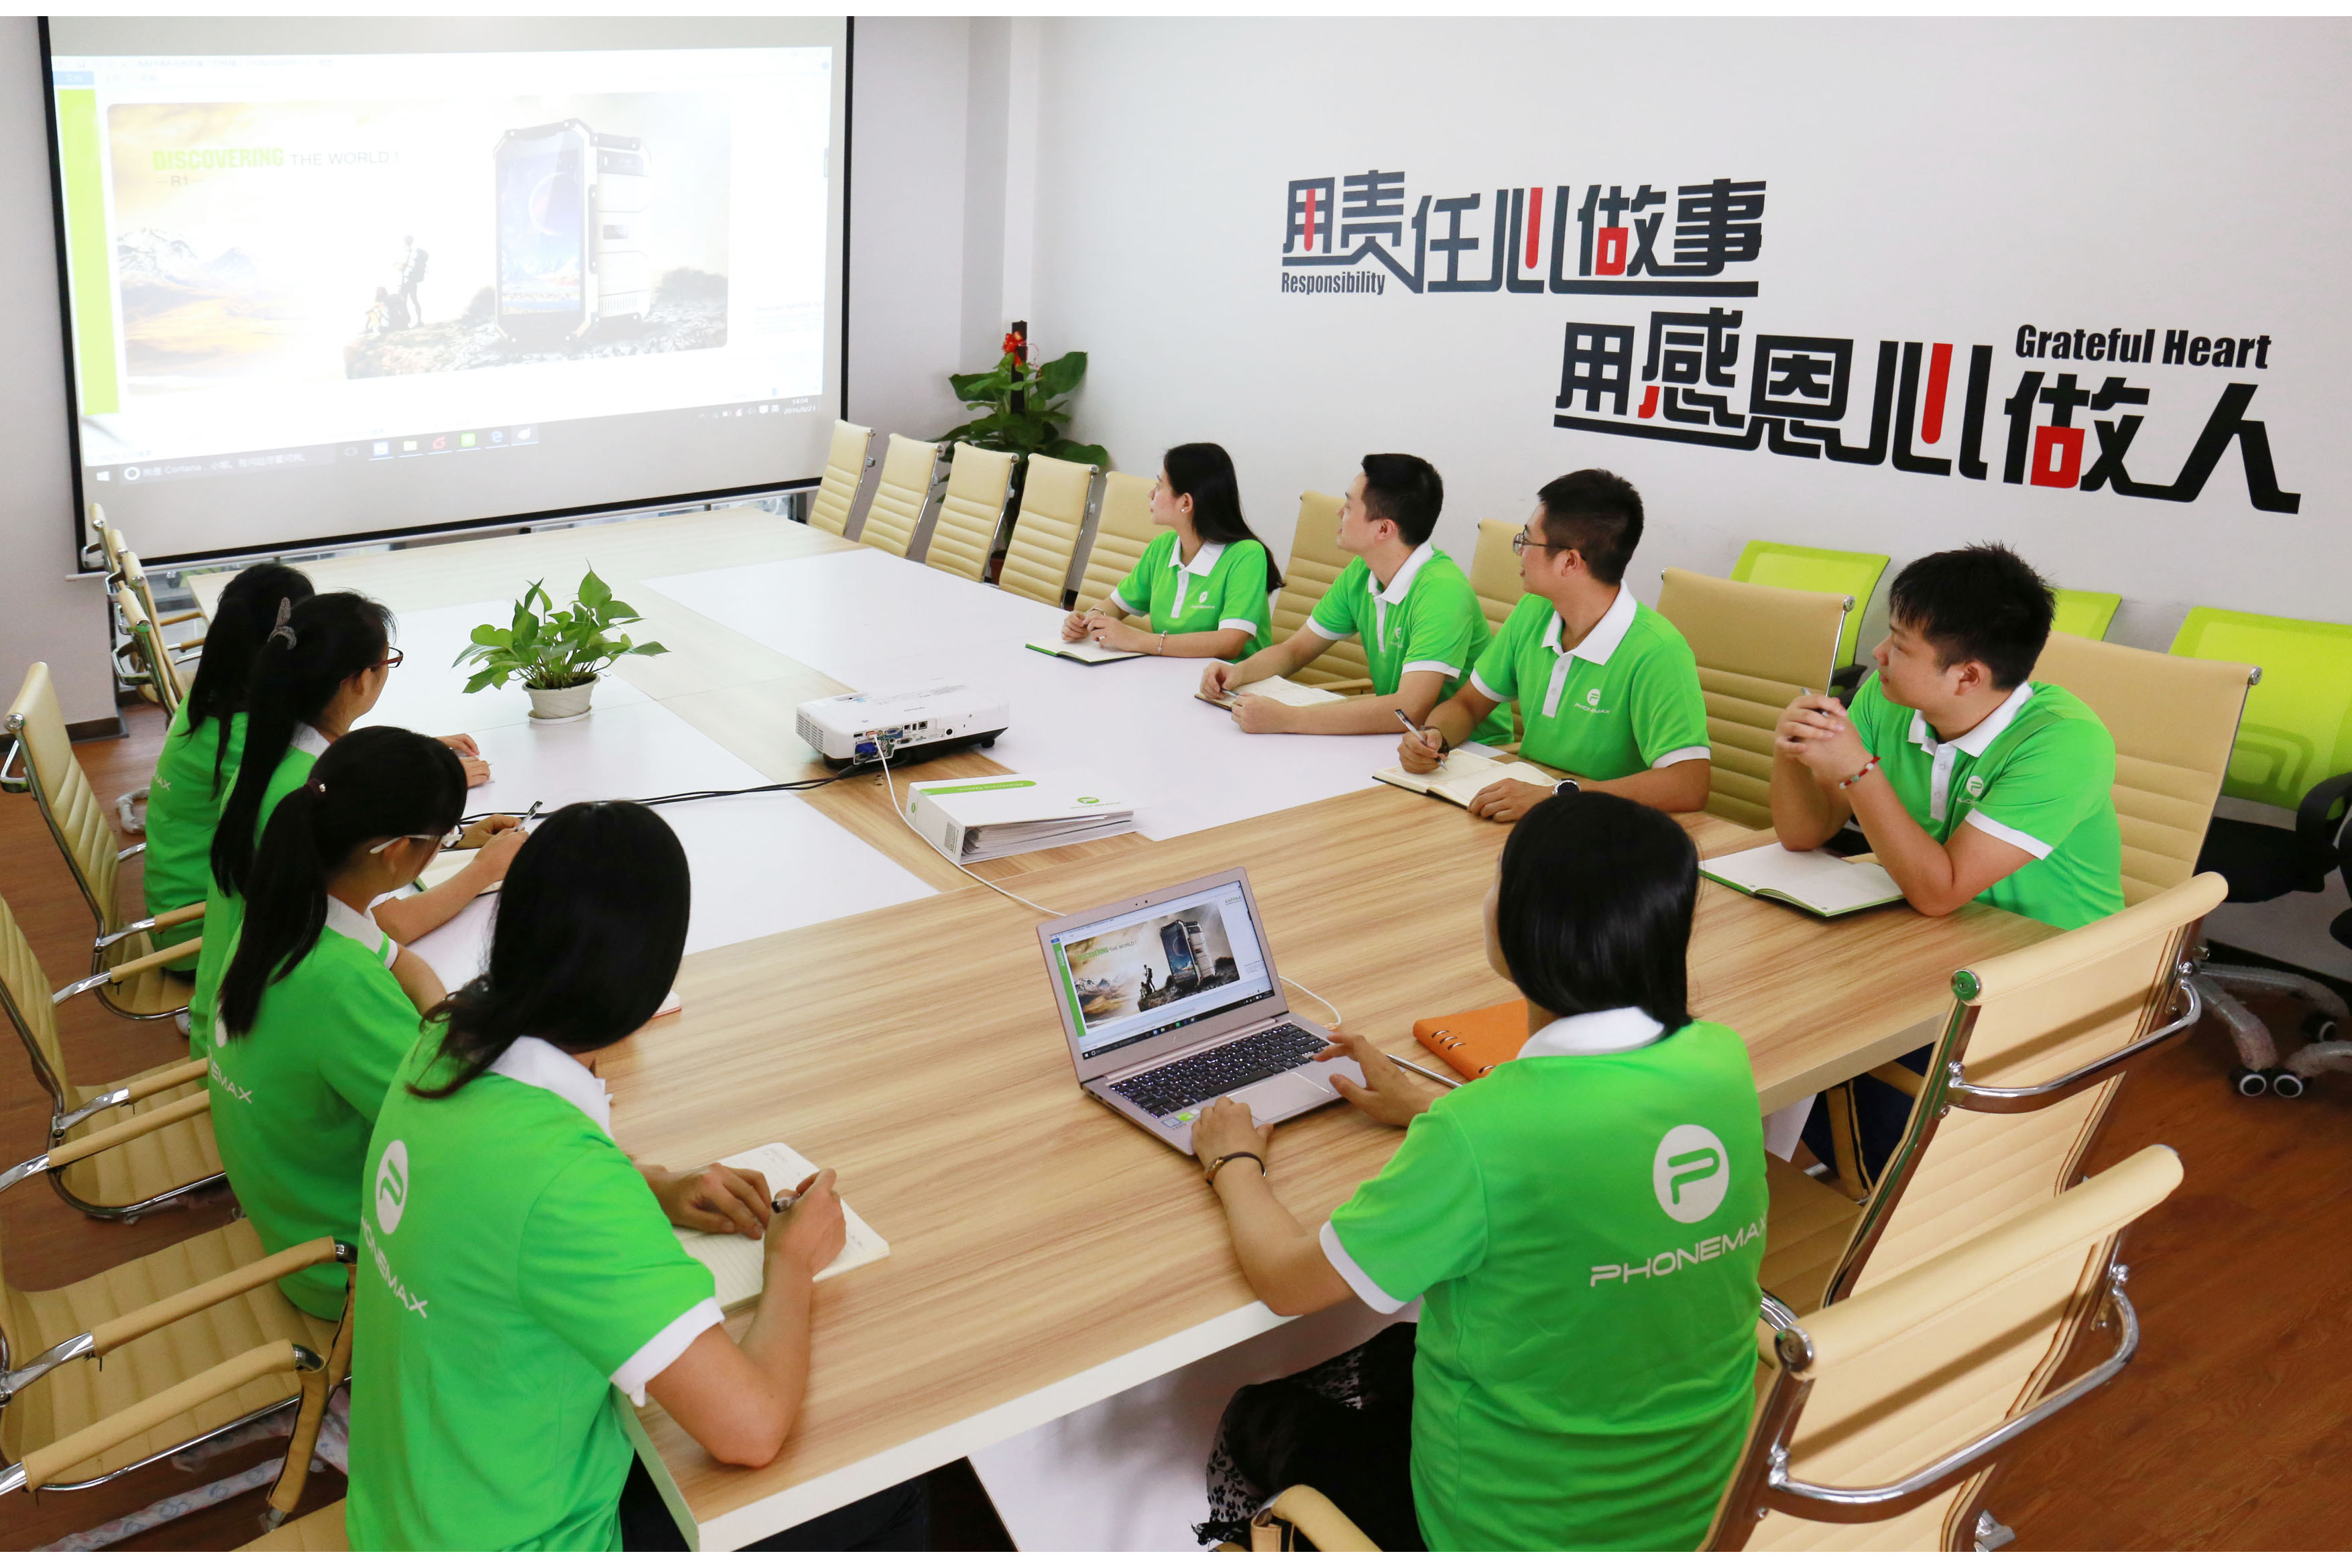 Shenzhen Phonemax Technology Co., Ltd.